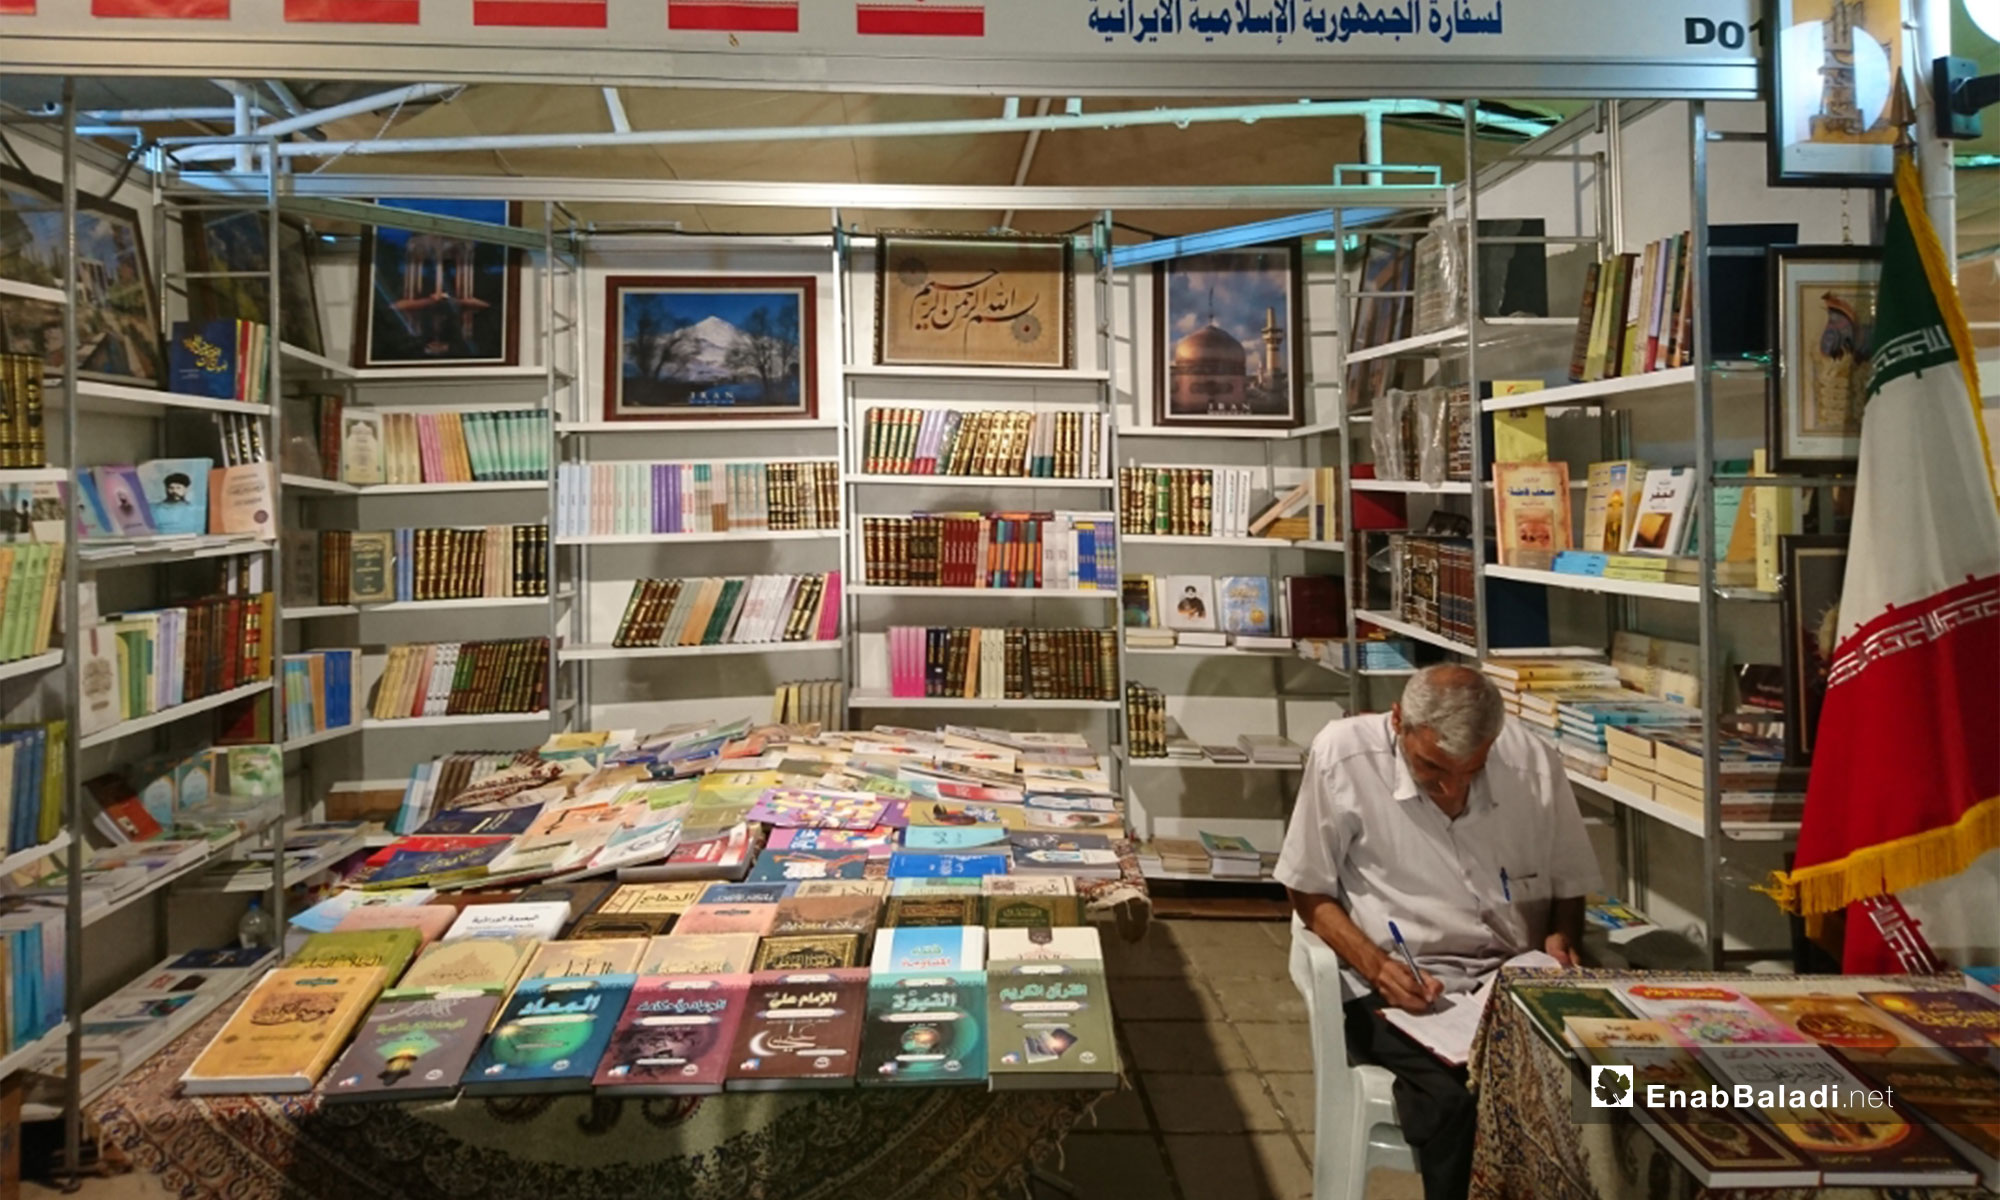 The Book Fair in Damascus - August 8, 2018 (Enab Baladi)